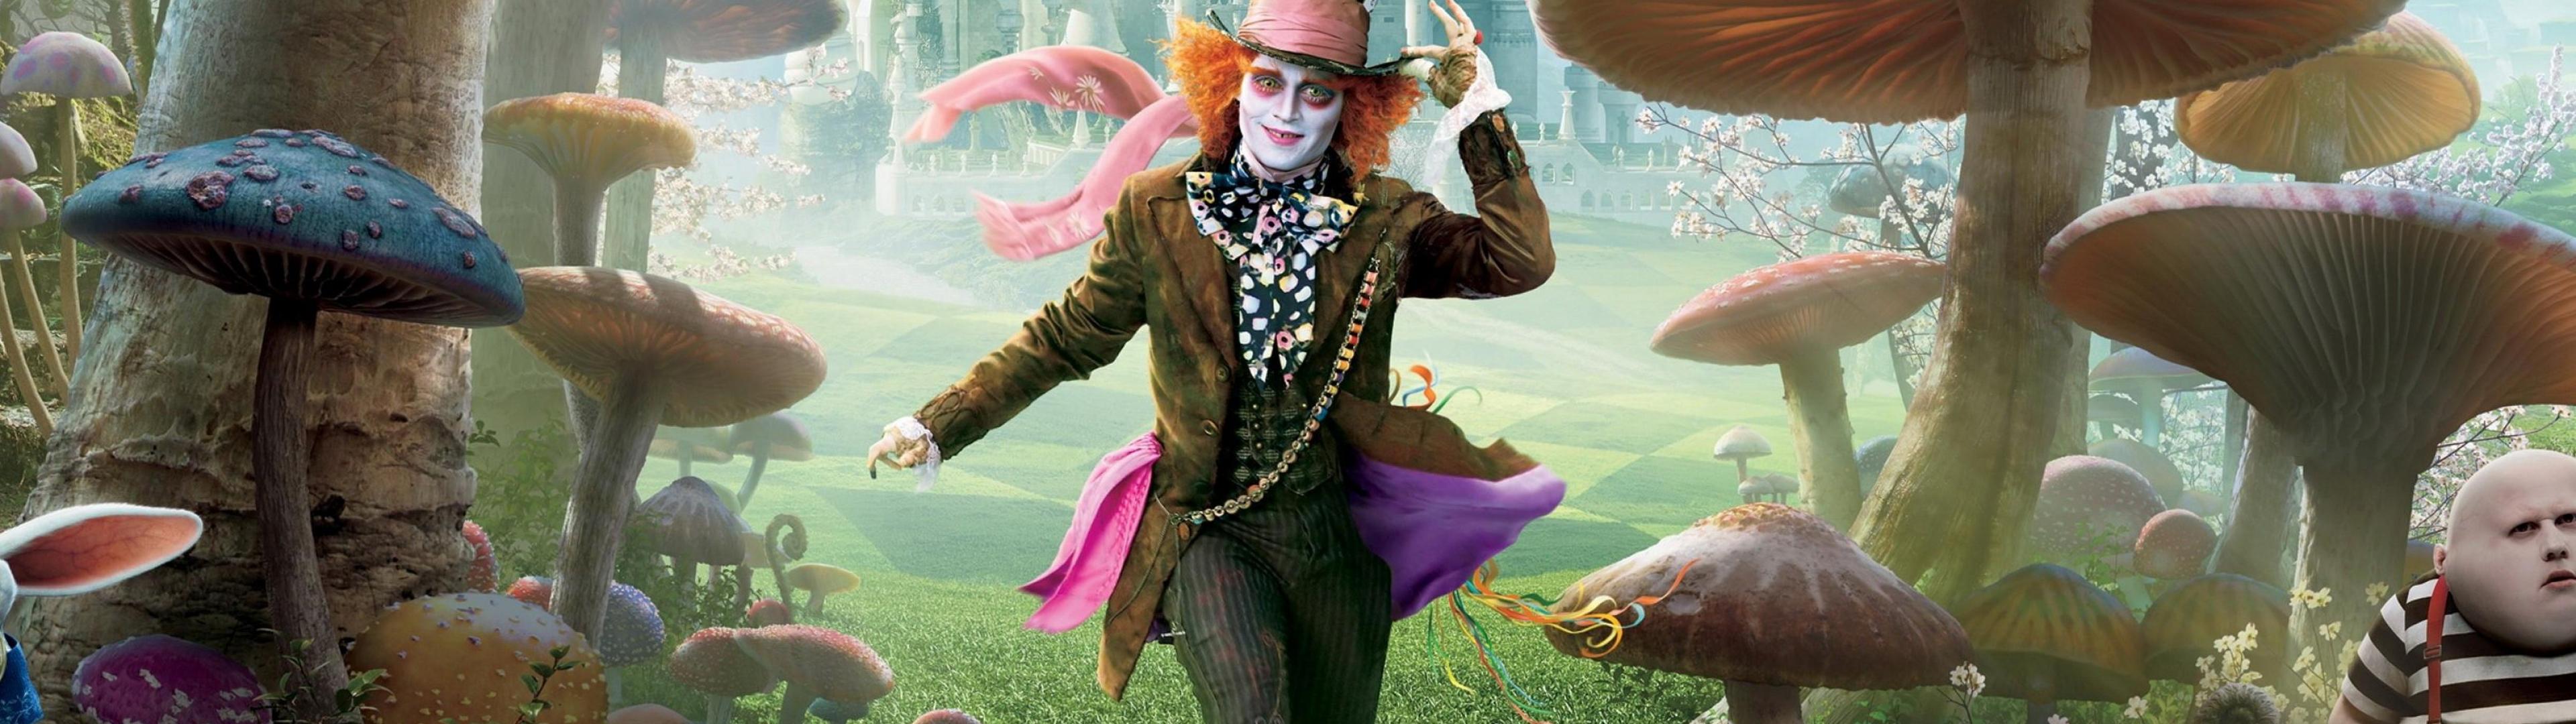 Fantasy Alice In Wonderland Mad Hatter Johnny Depp Bxqx